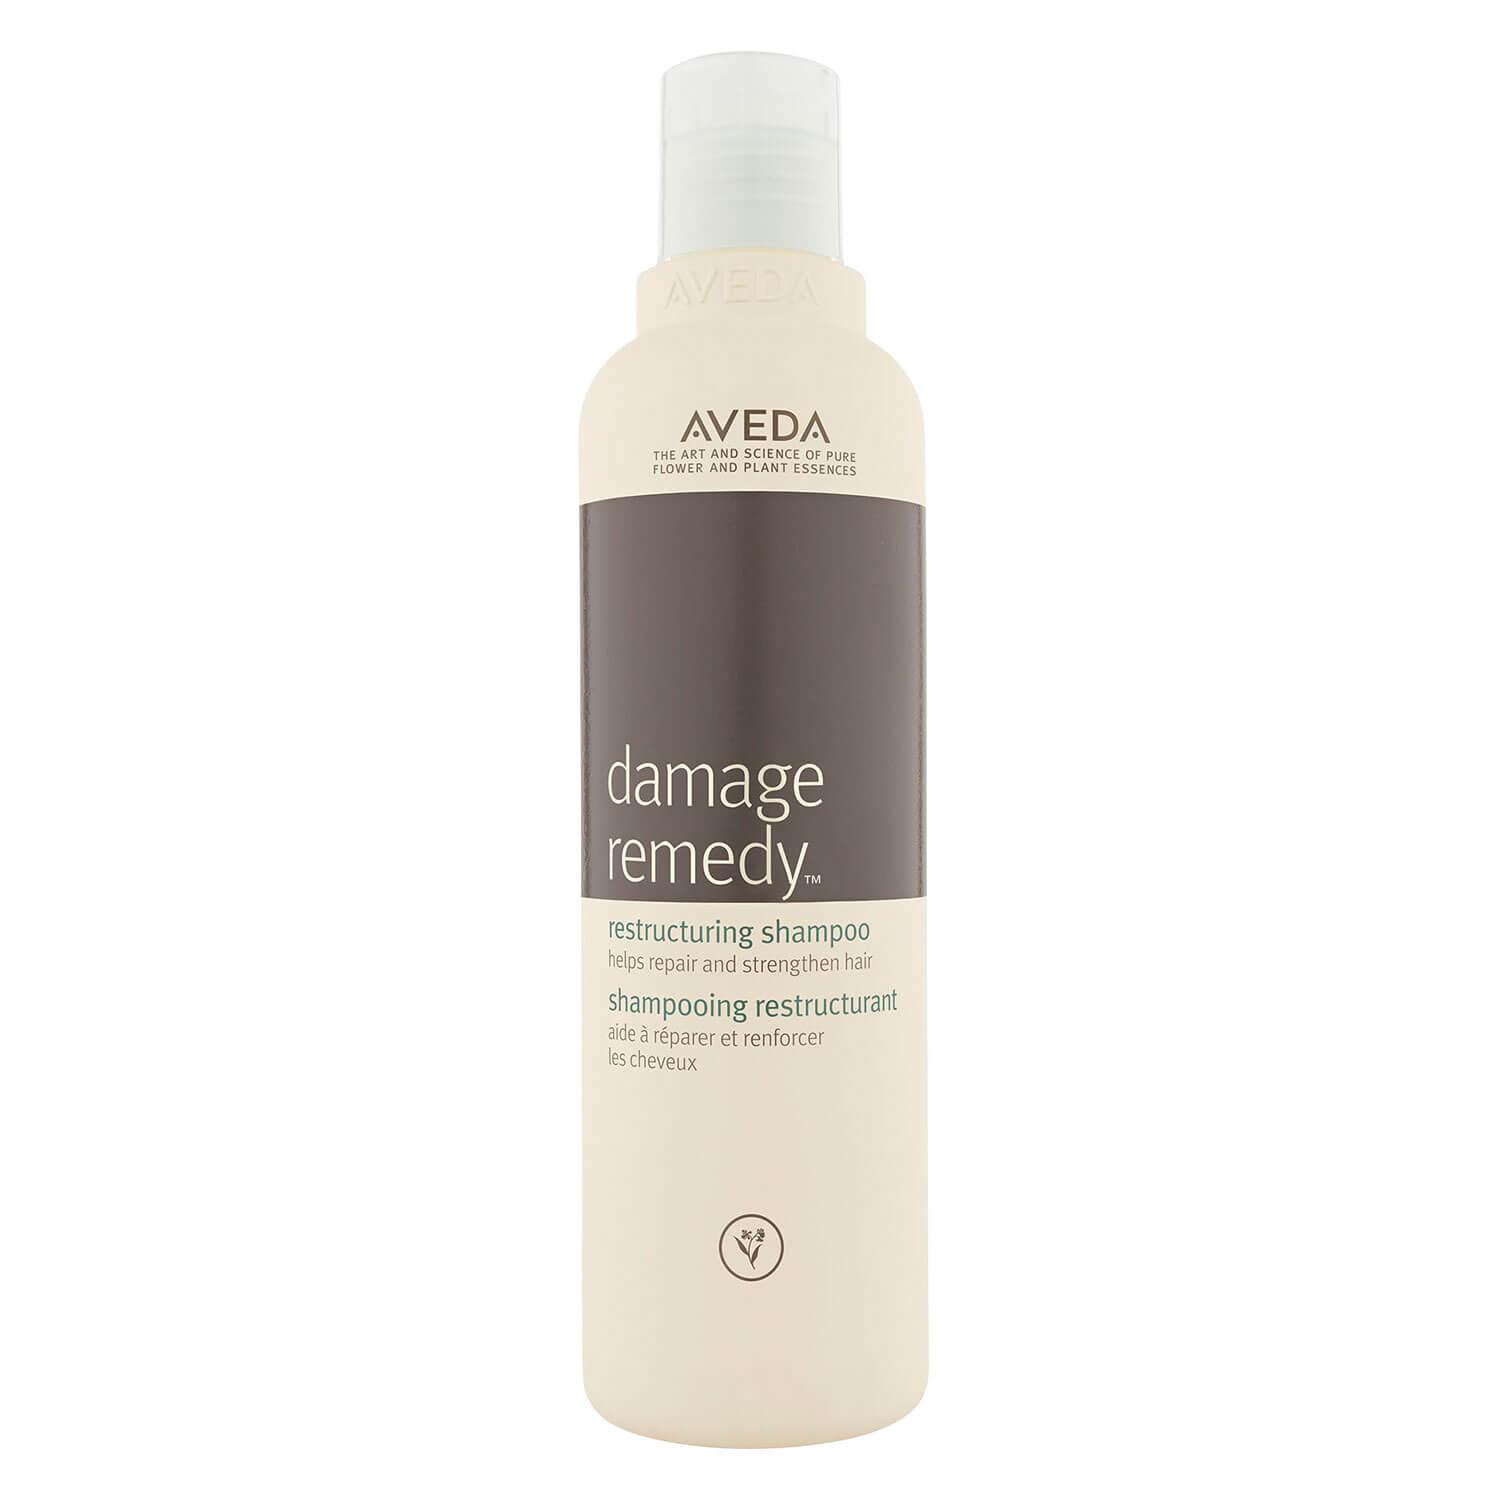 damage remedy - restructuring shampoo